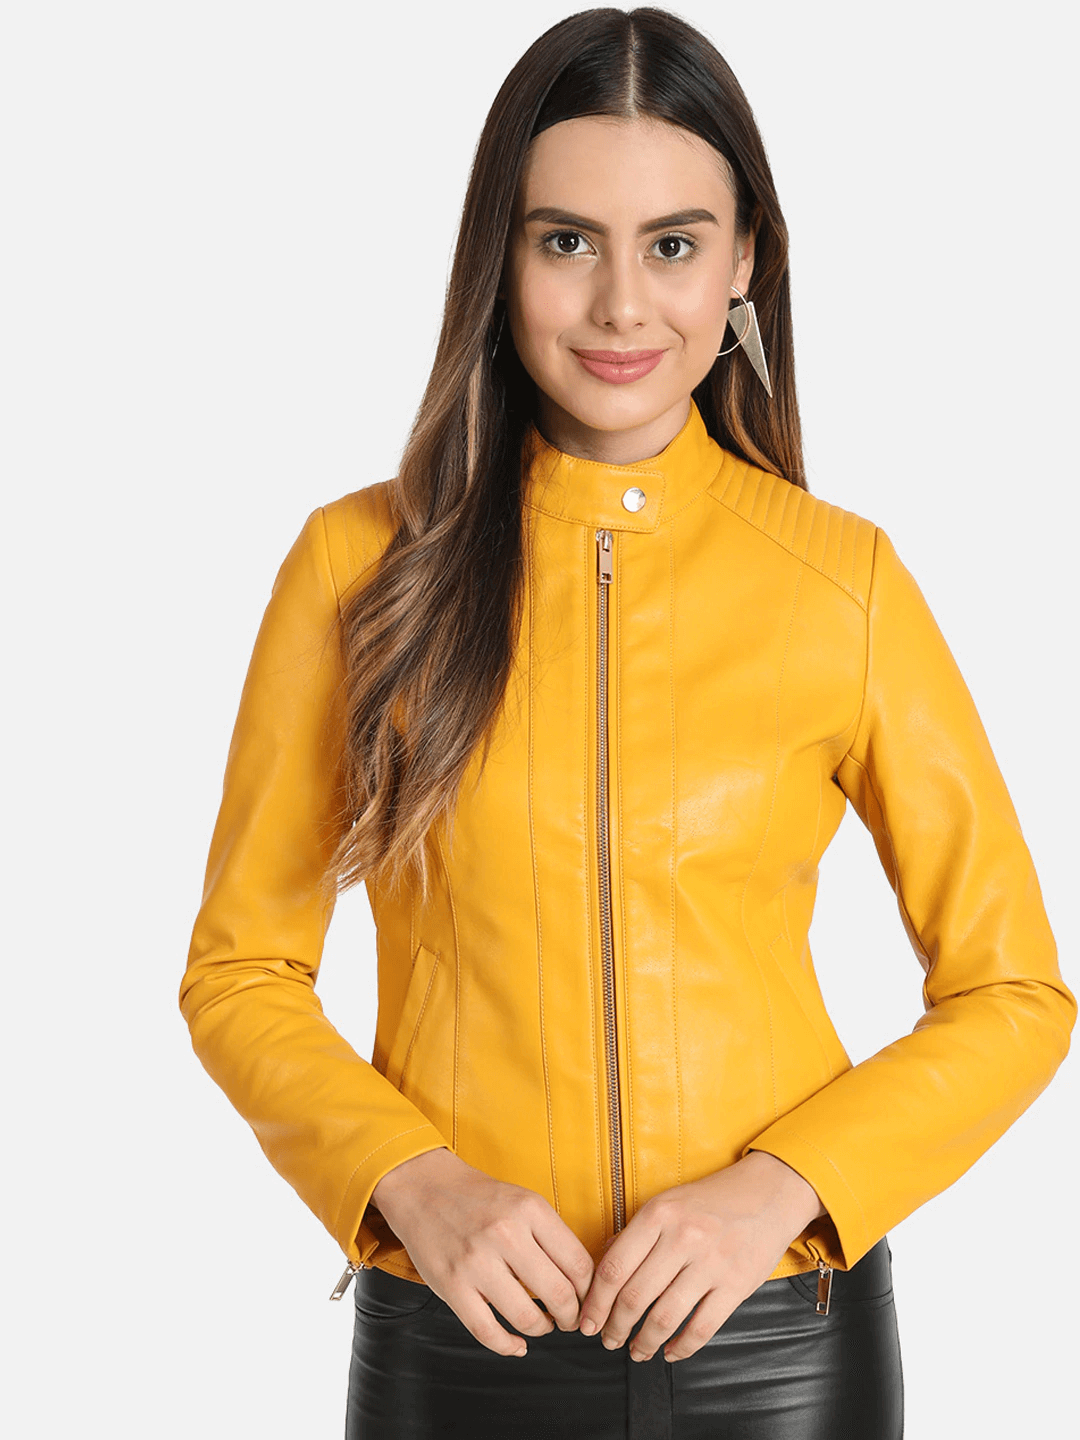 Sculpt Australia womens leather jacket Snap Tab Yellow Leather Jacket